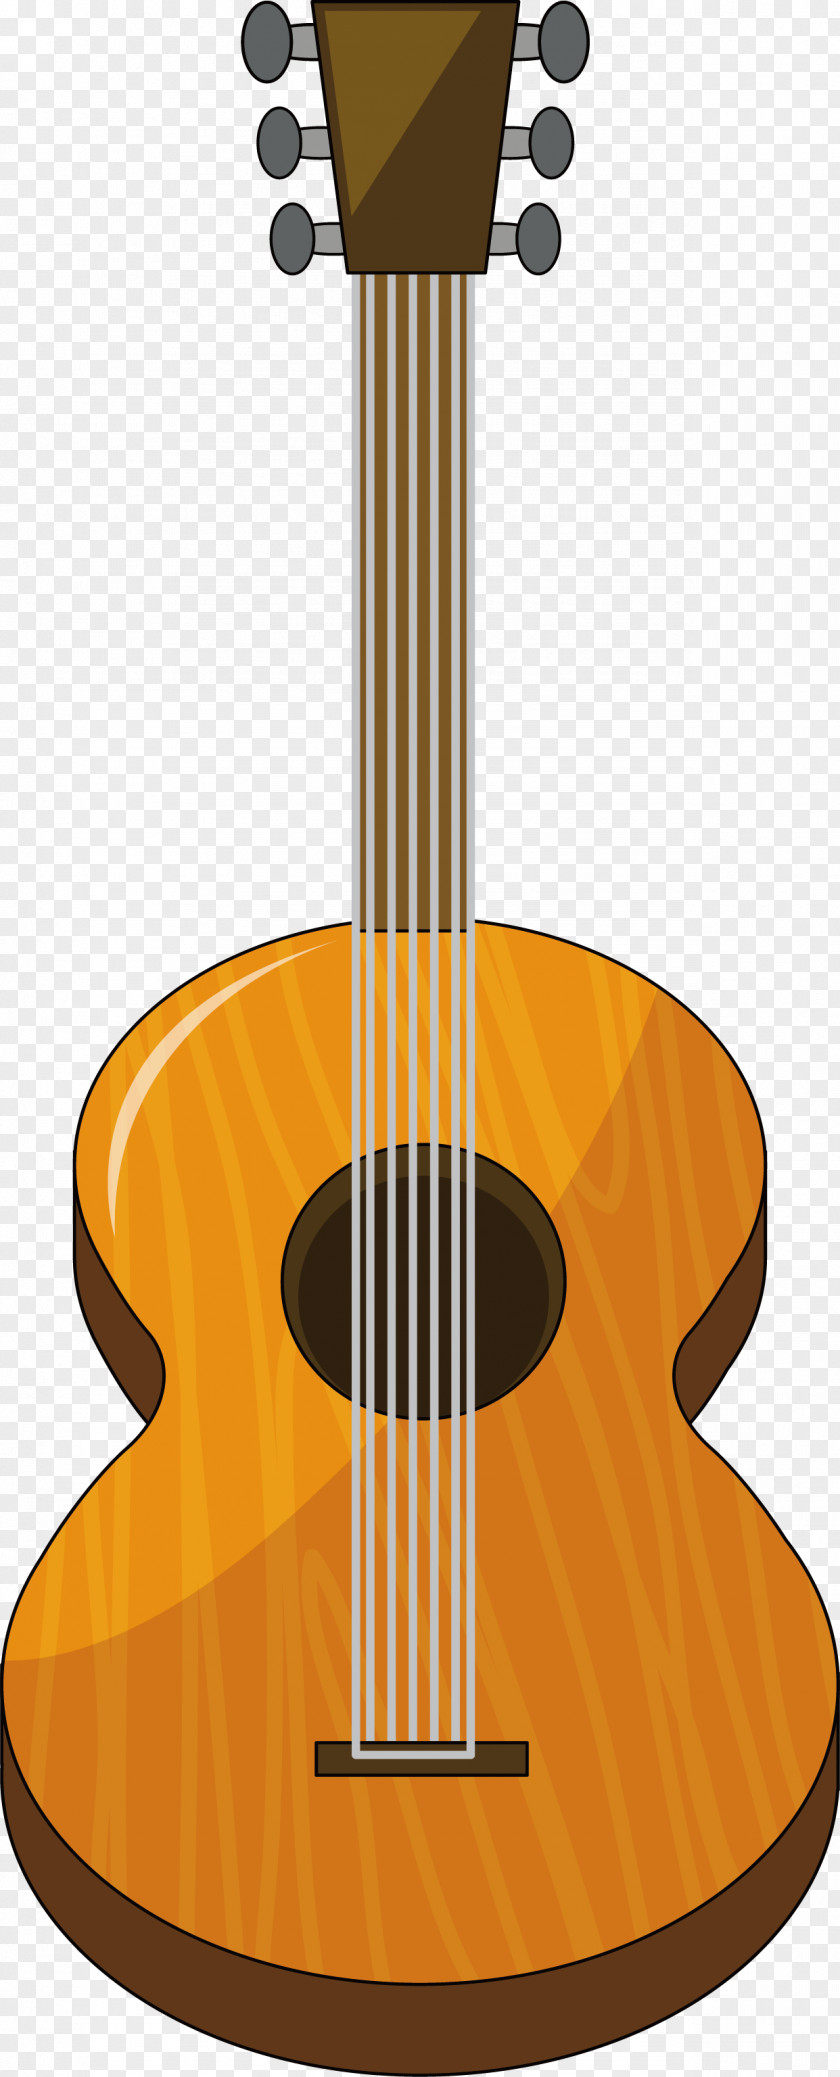 Wooden Folk Guitar Musical Instrument Stock Illustration PNG